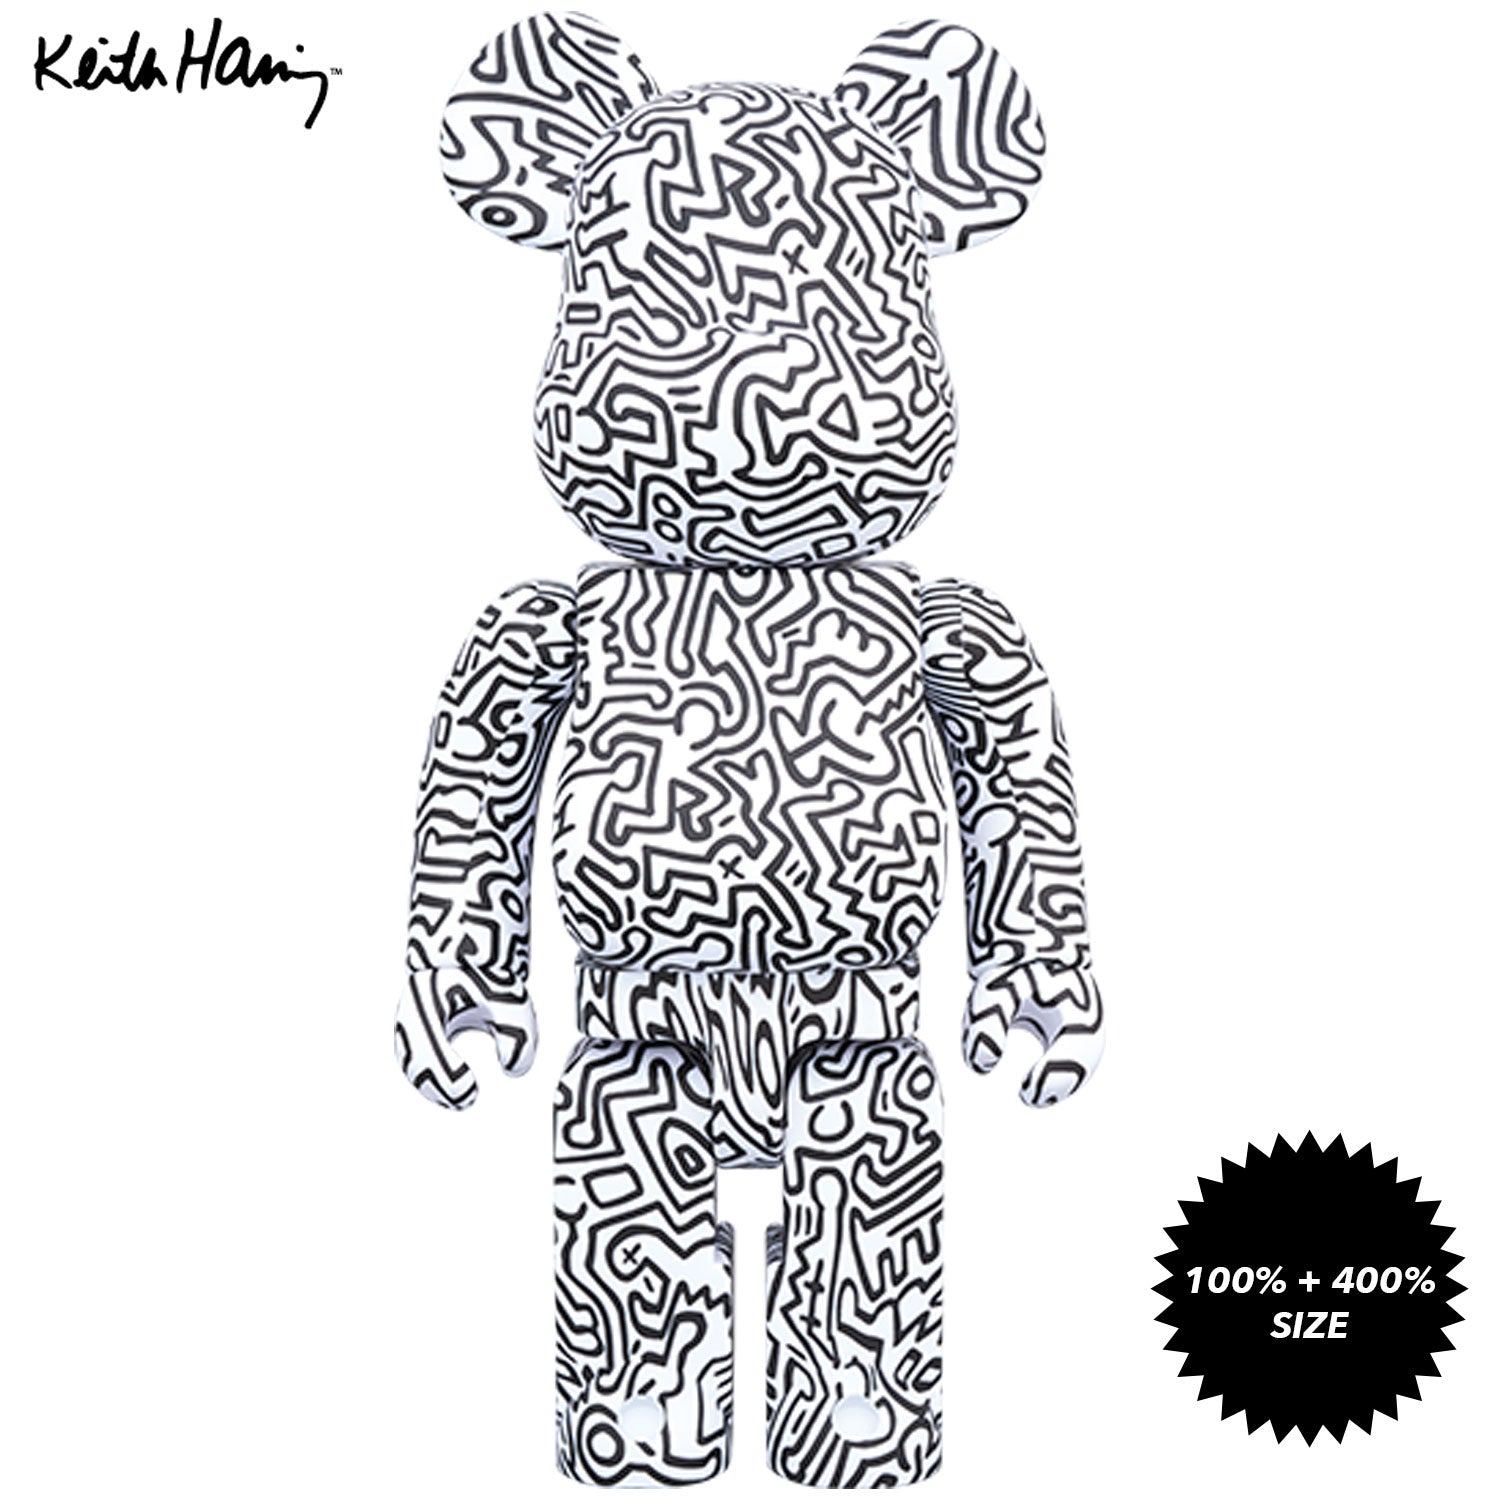 Keith Haring #4 100% + 400% Bearbrick Set by Medicom Toy